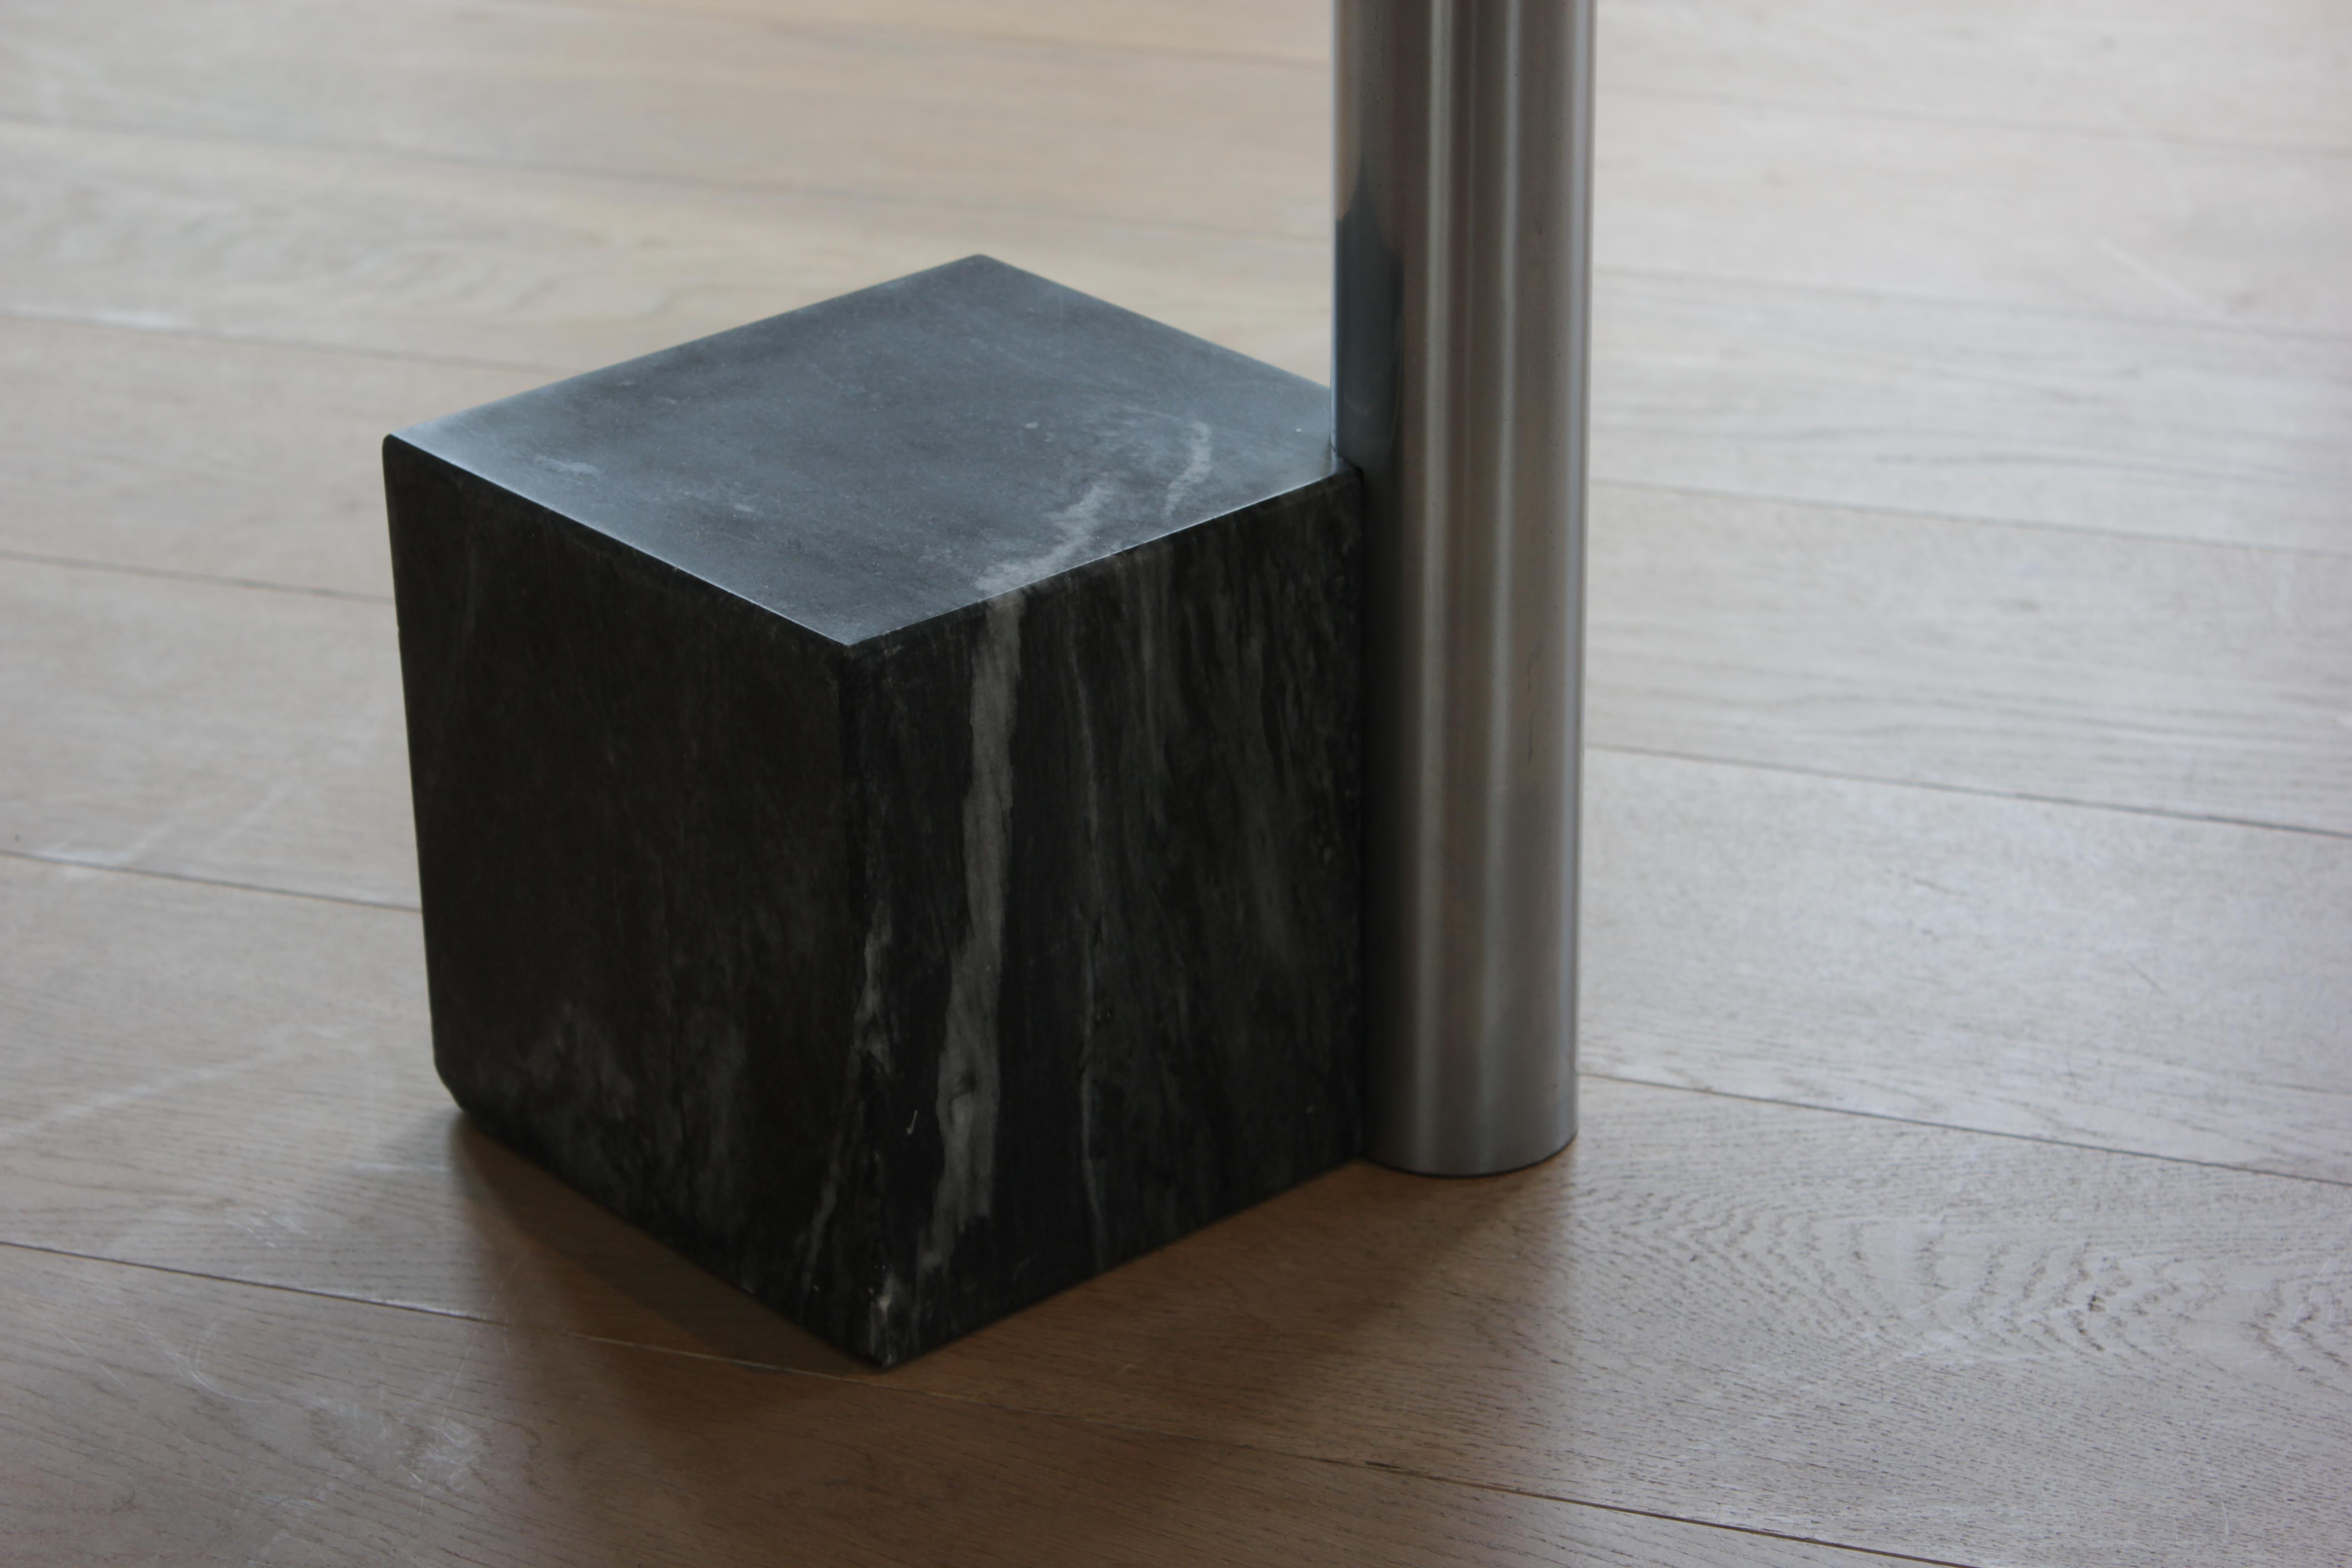  Post-Modern HK2 Side table by Hank Kwint for Metaform For Sale 1